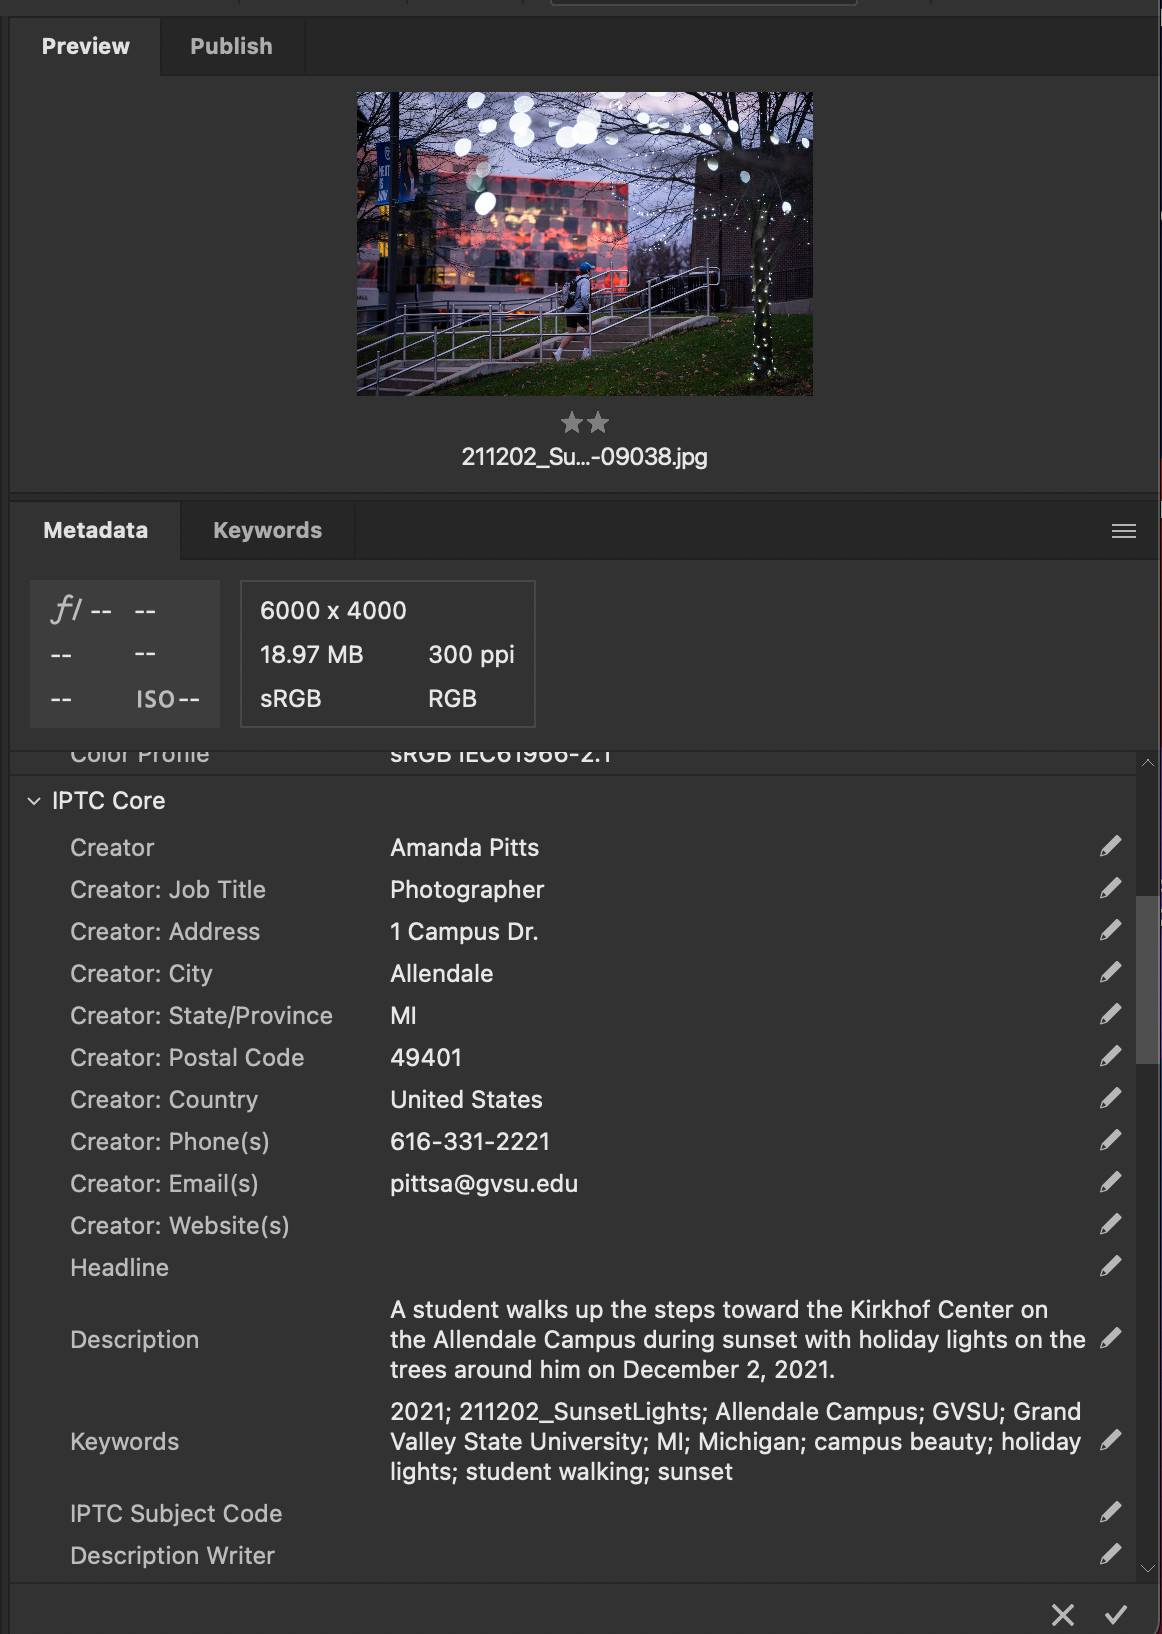 Screenshot of Adobe Bridge photo info